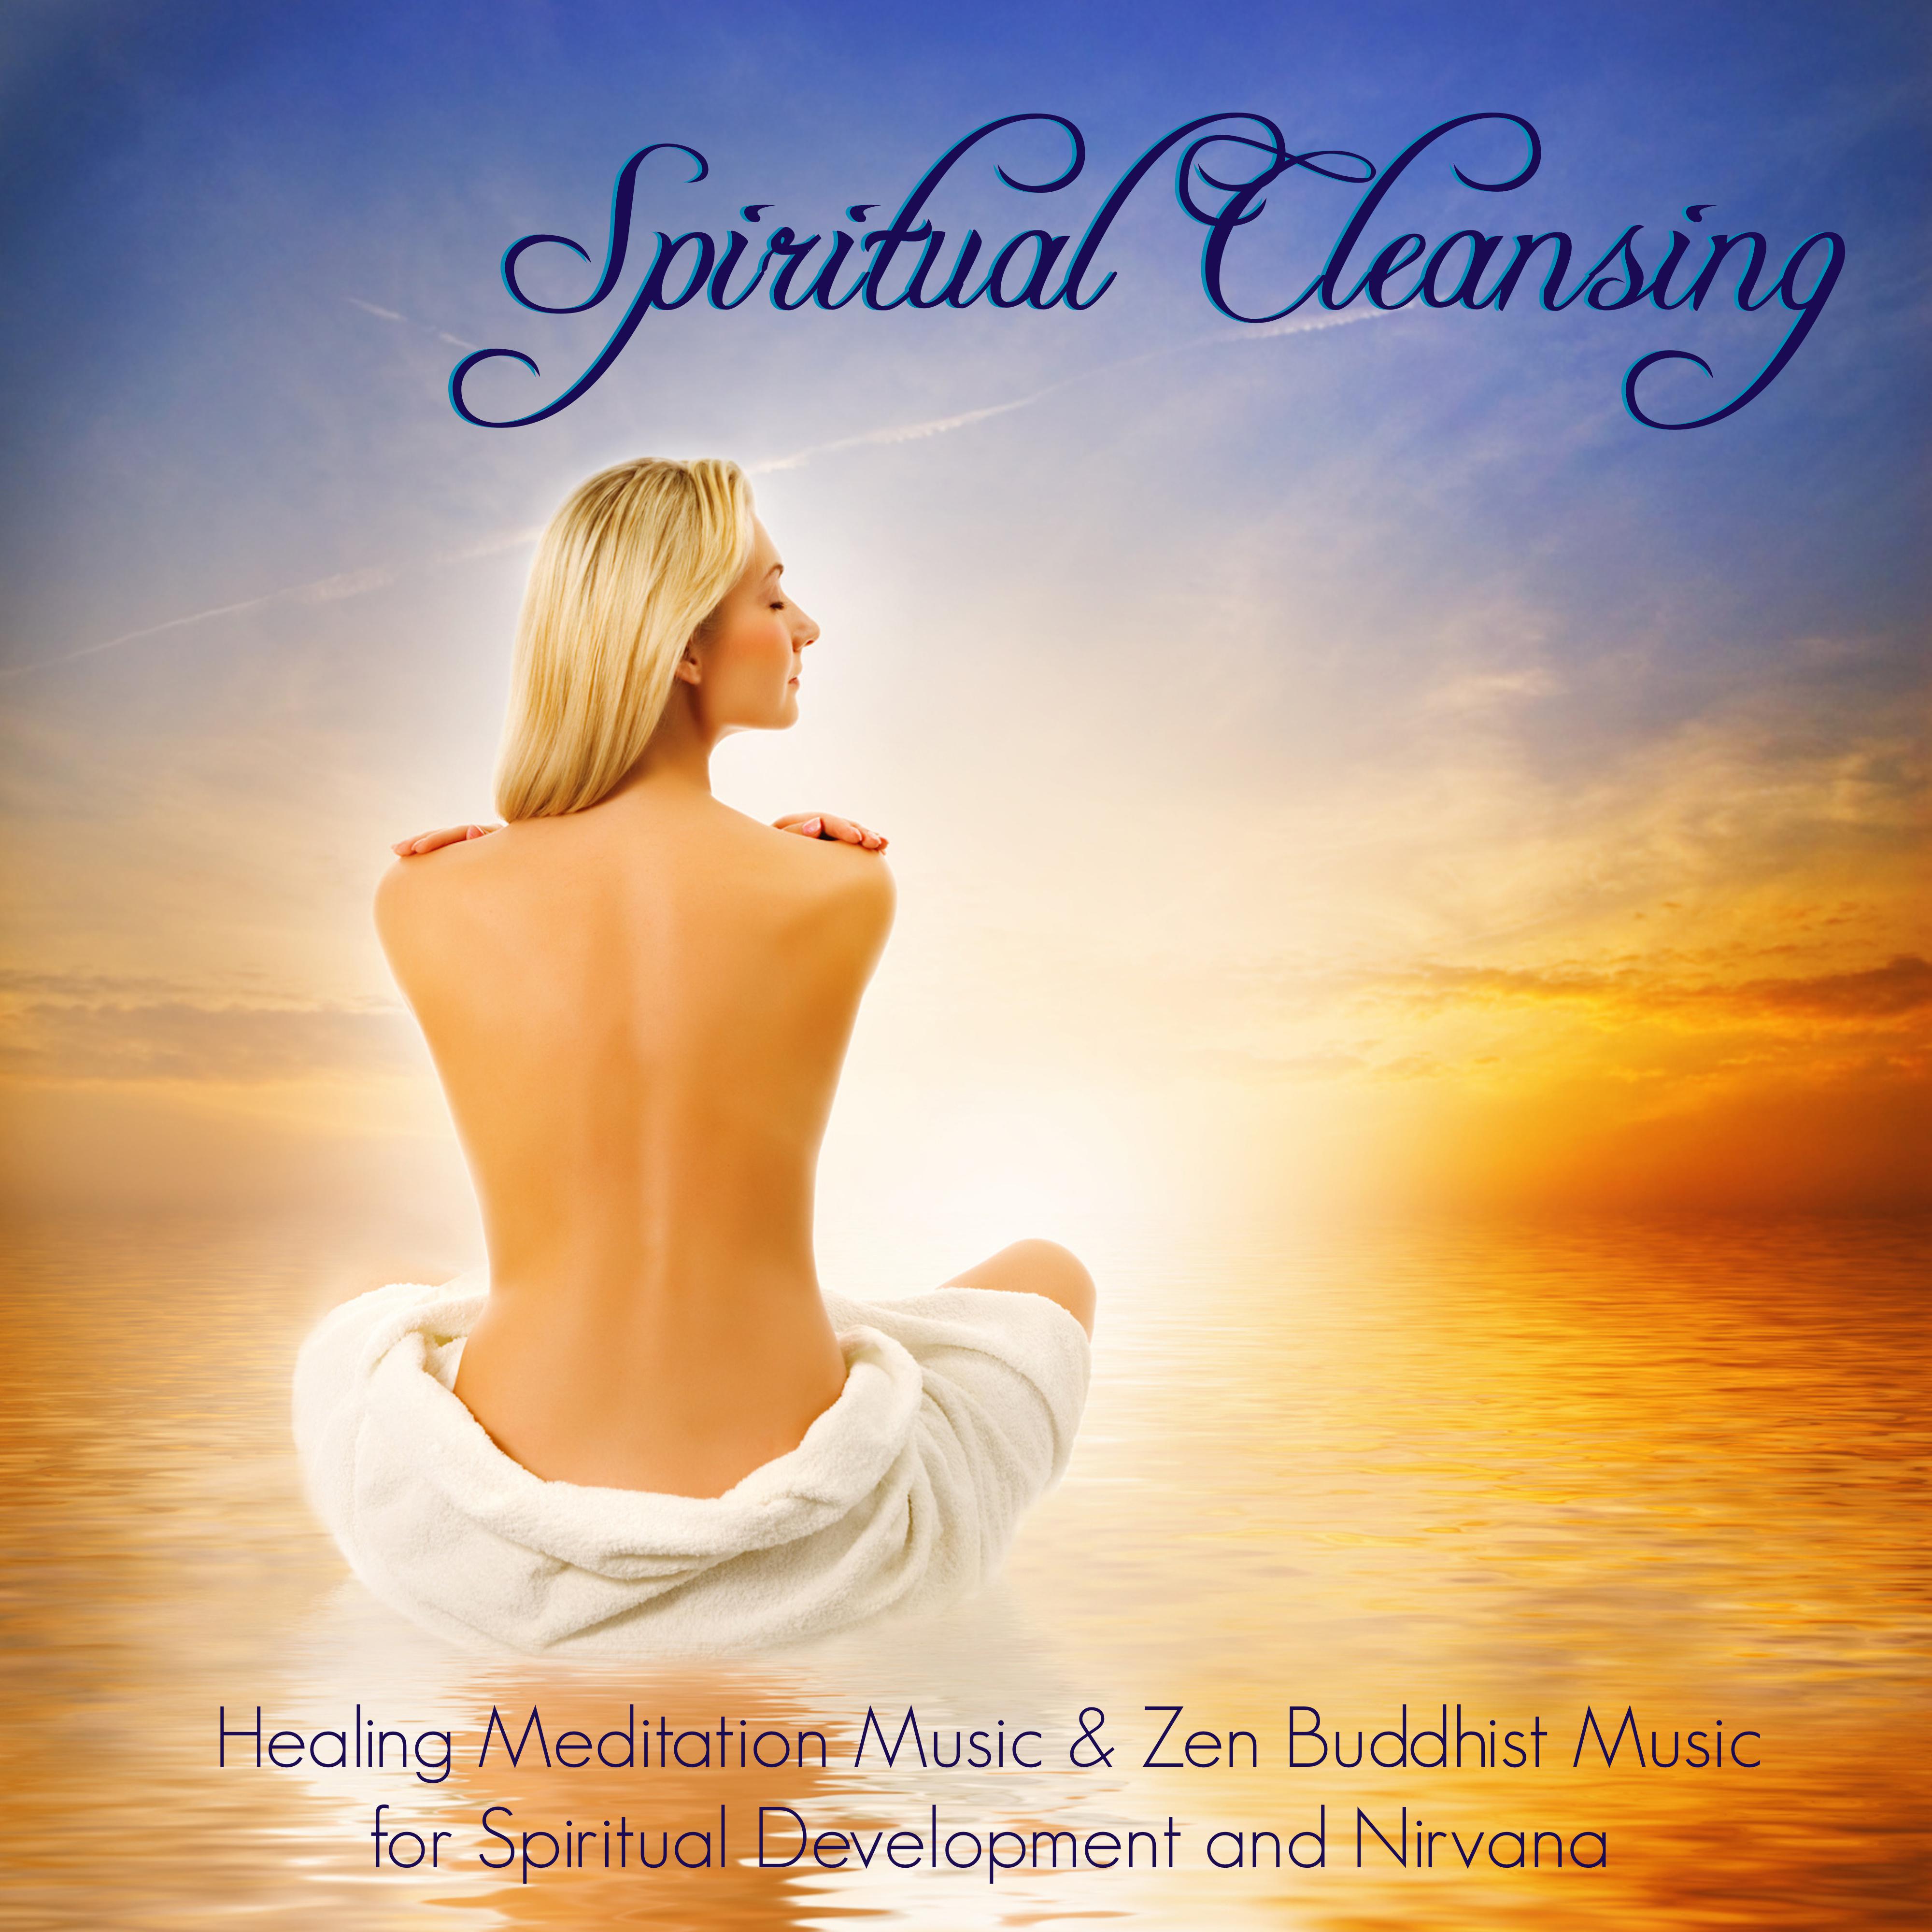 Spiritual Meditation Music